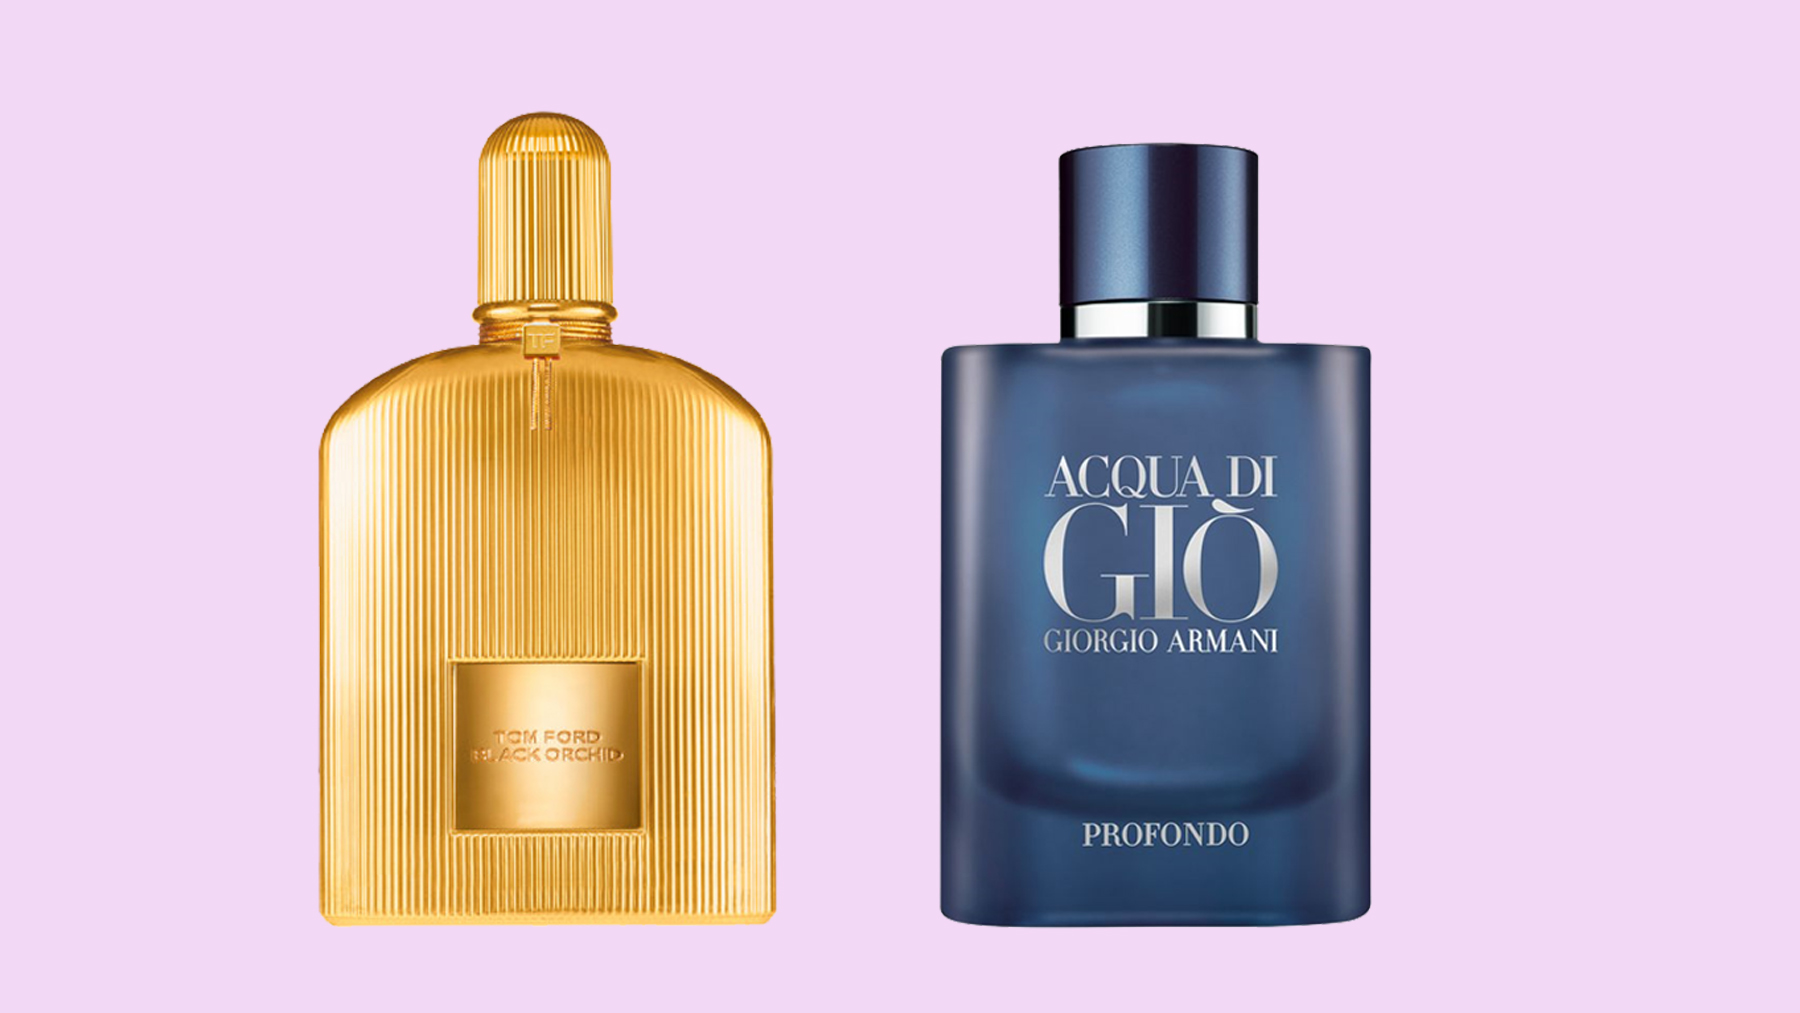 Perfume año / Armani y Tom Ford